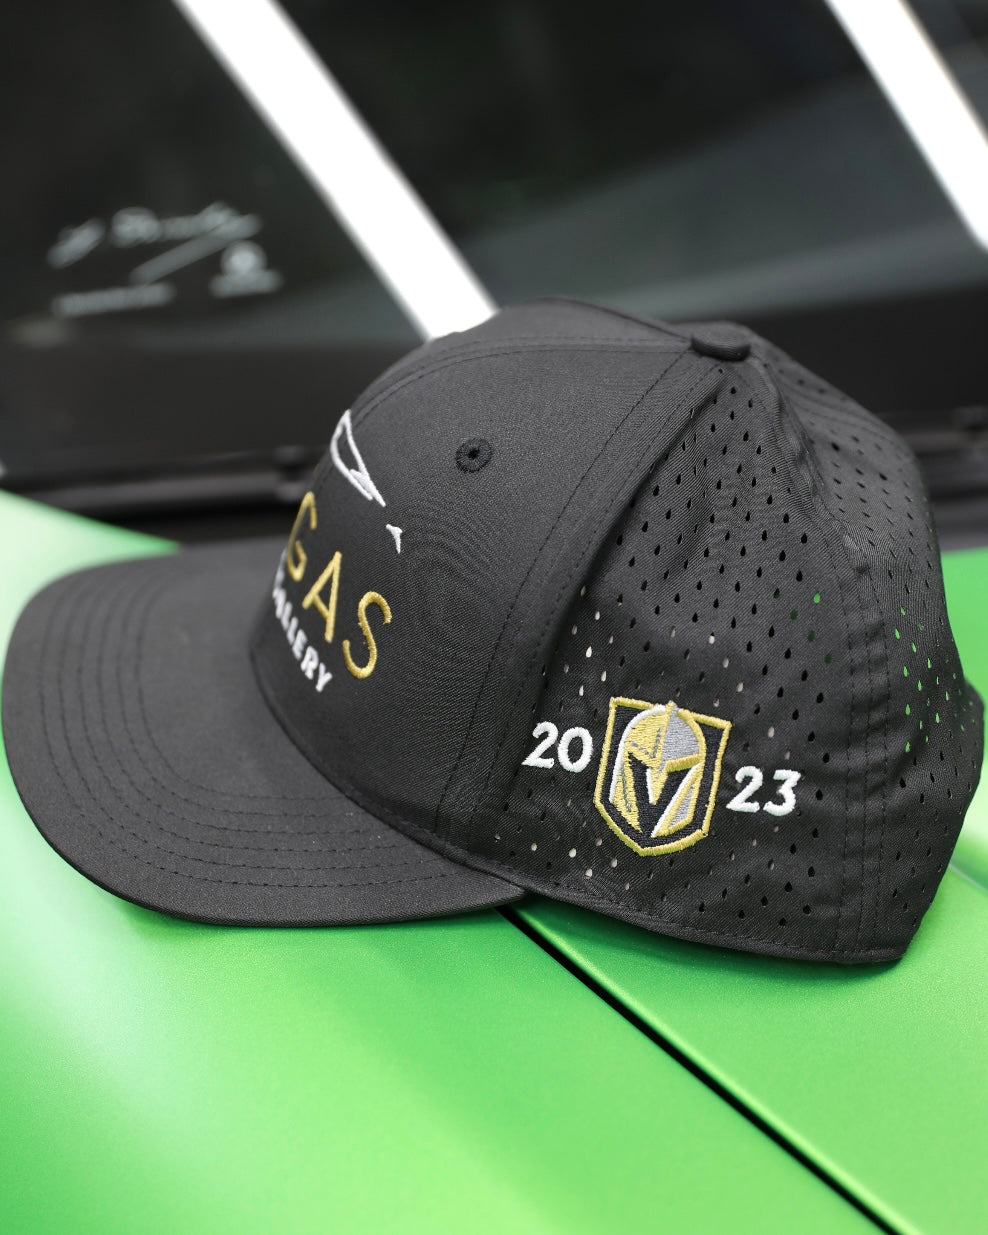 Vegas Auto Gallery Hat